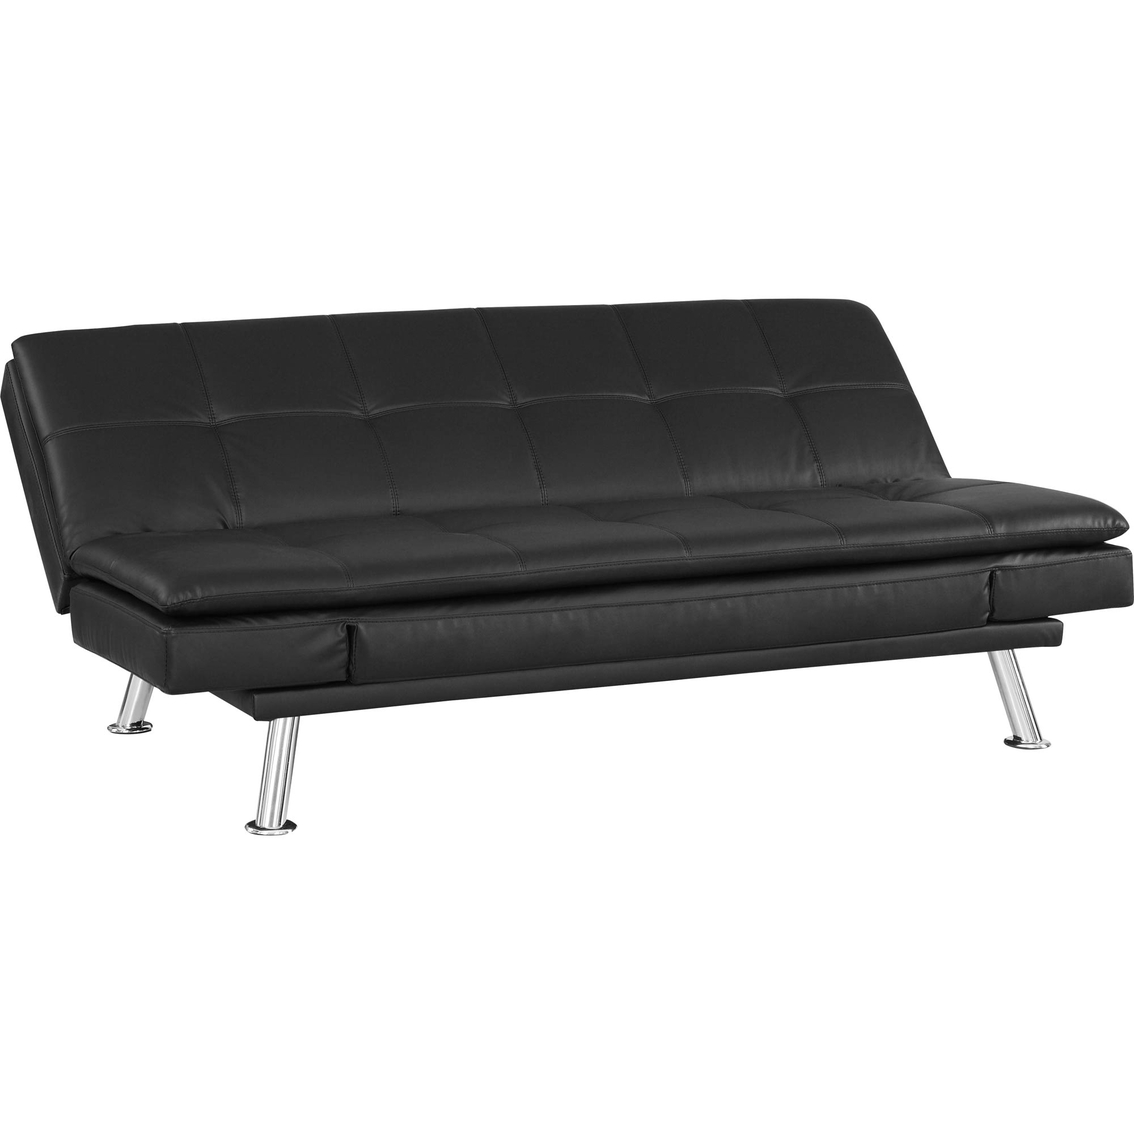 Serta Niles Compact Convertible Sleeper Sofa - Image 2 of 4